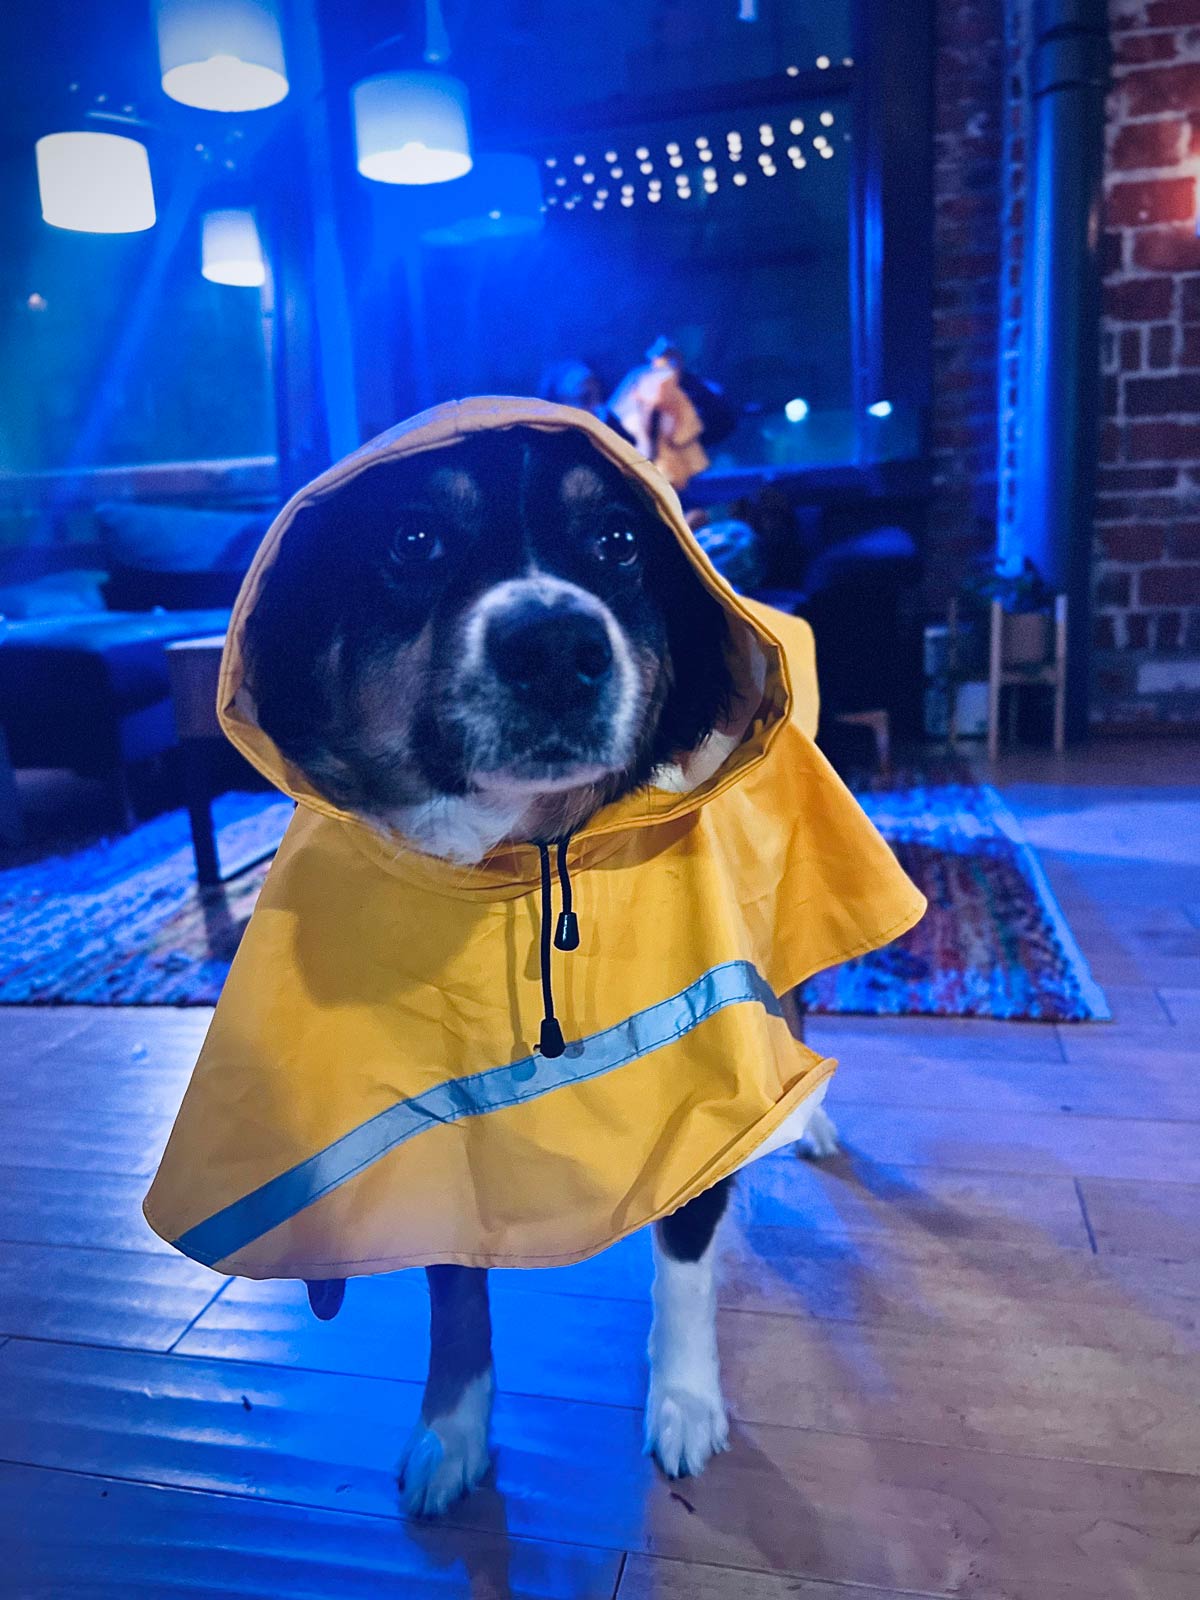 Anyway my dog has a raincoat